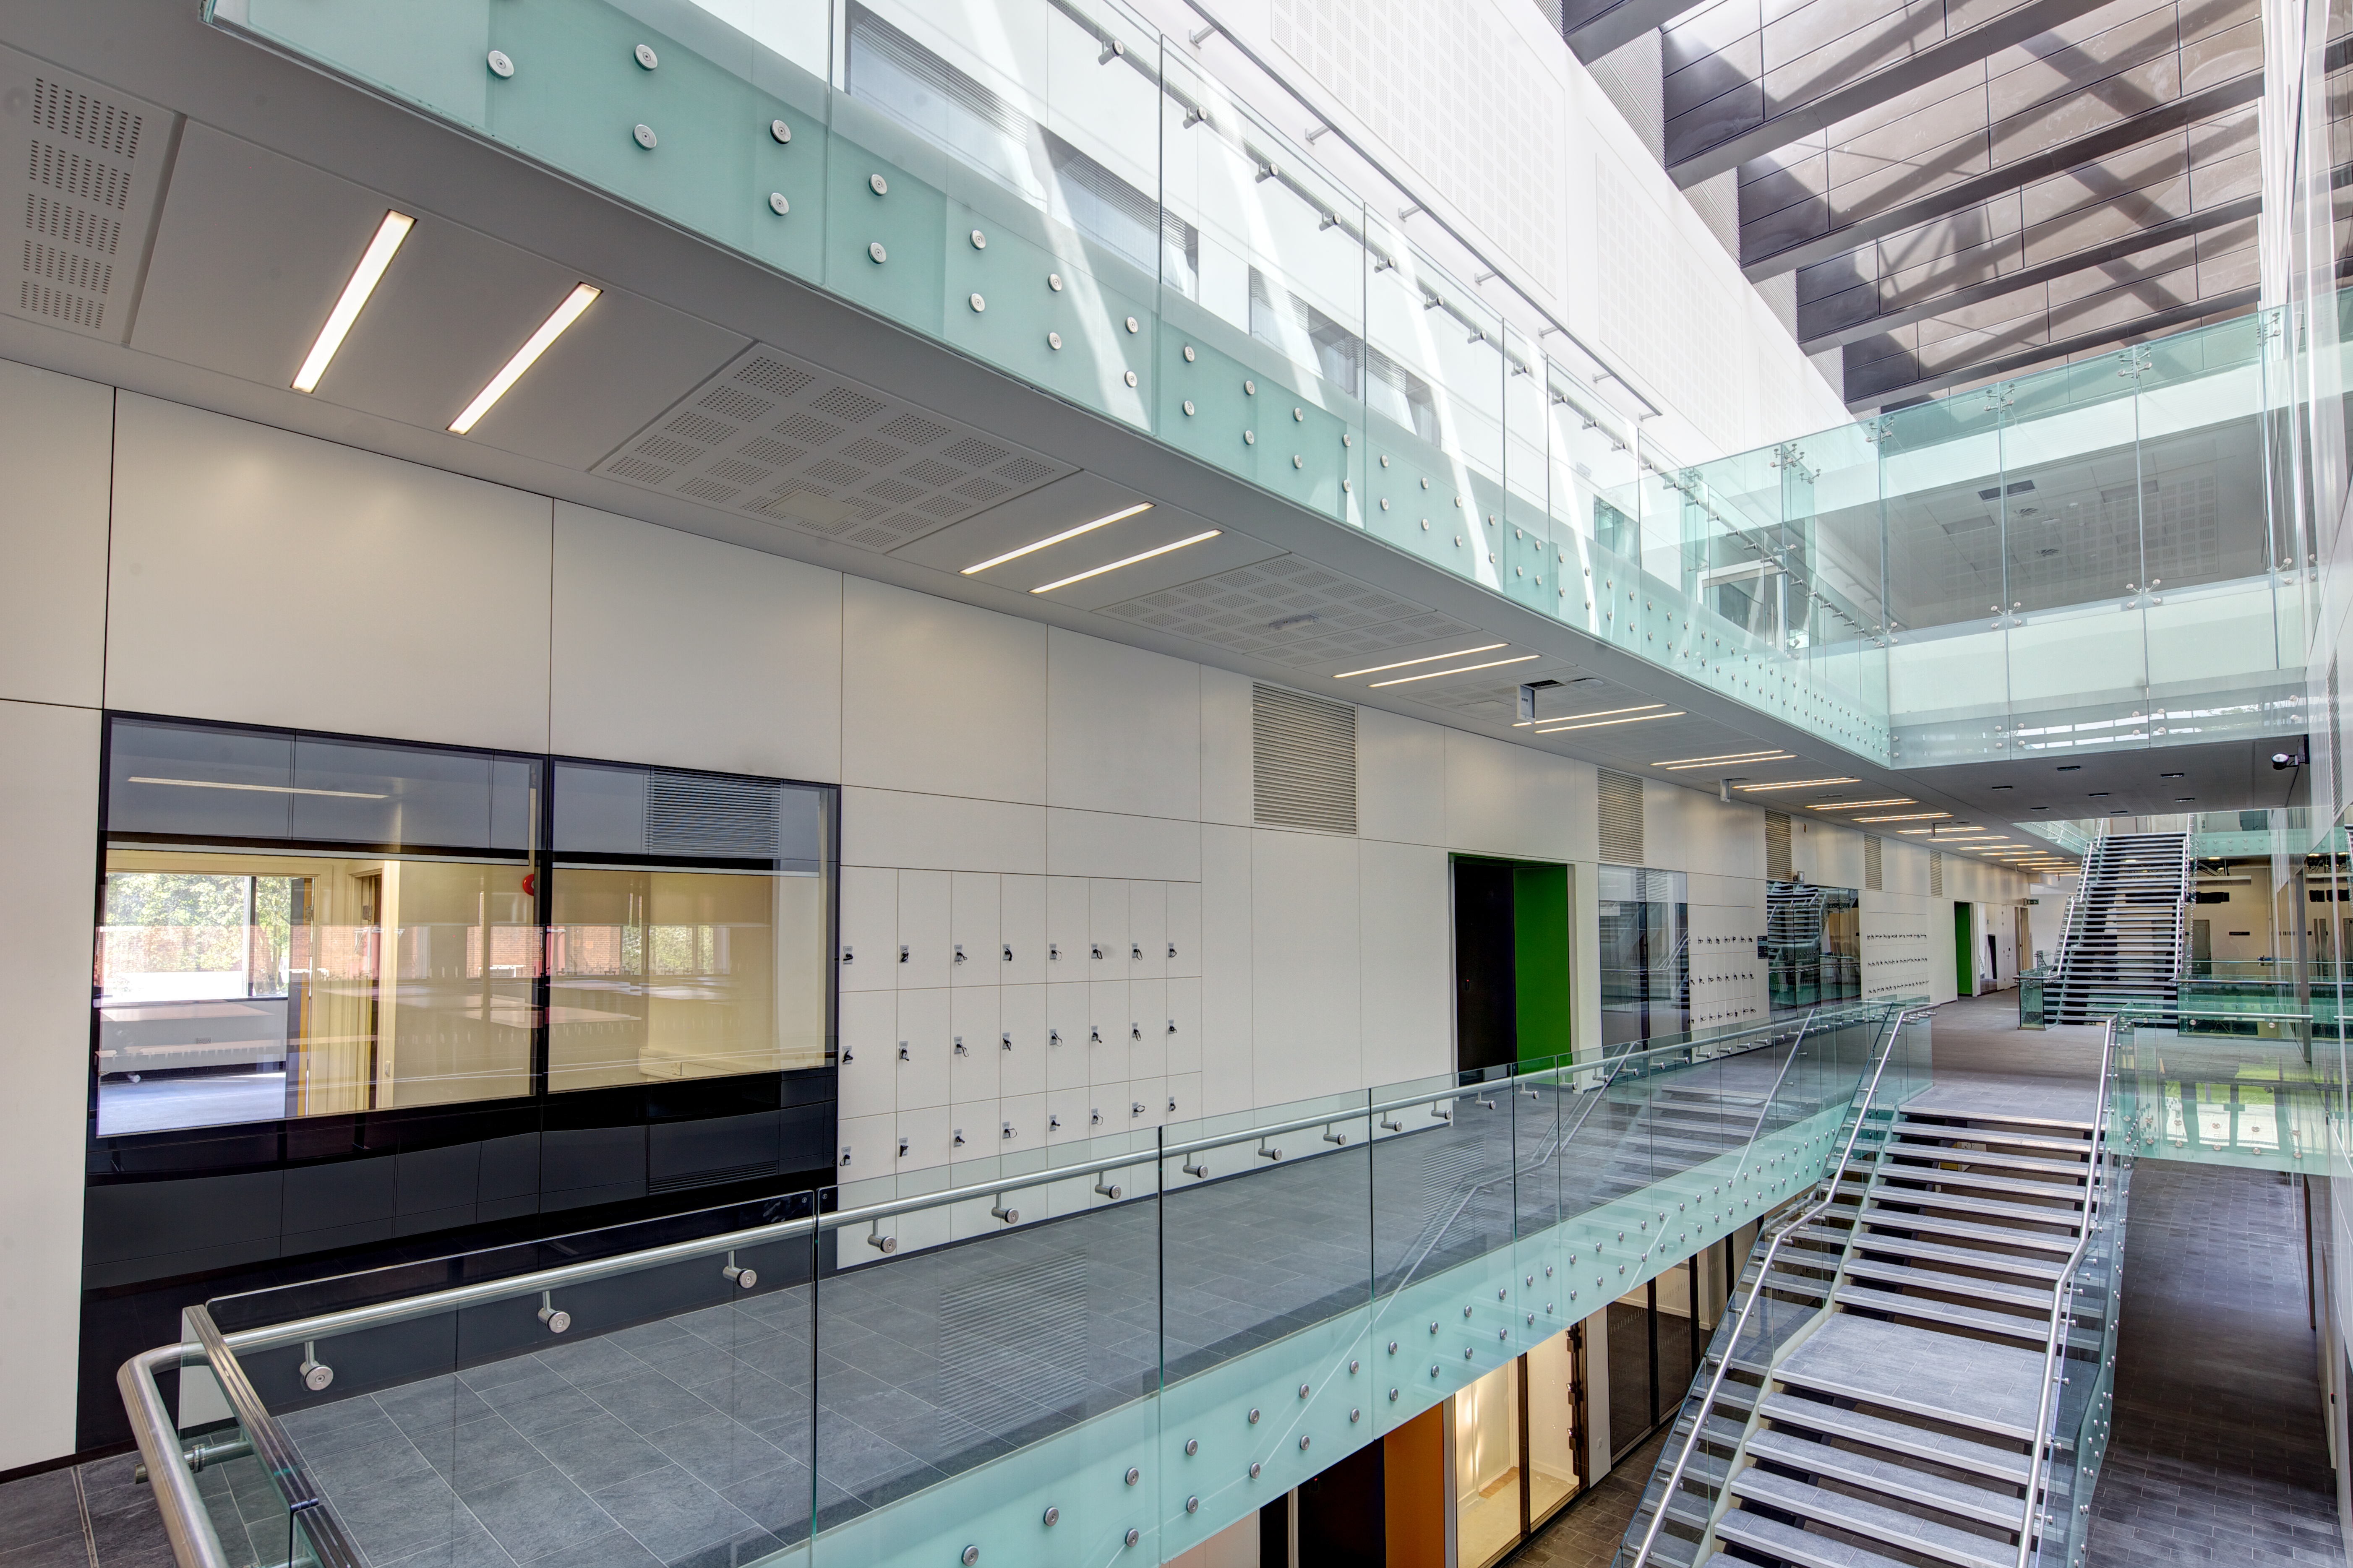 Central Teaching Laboratory, University of Liverpool